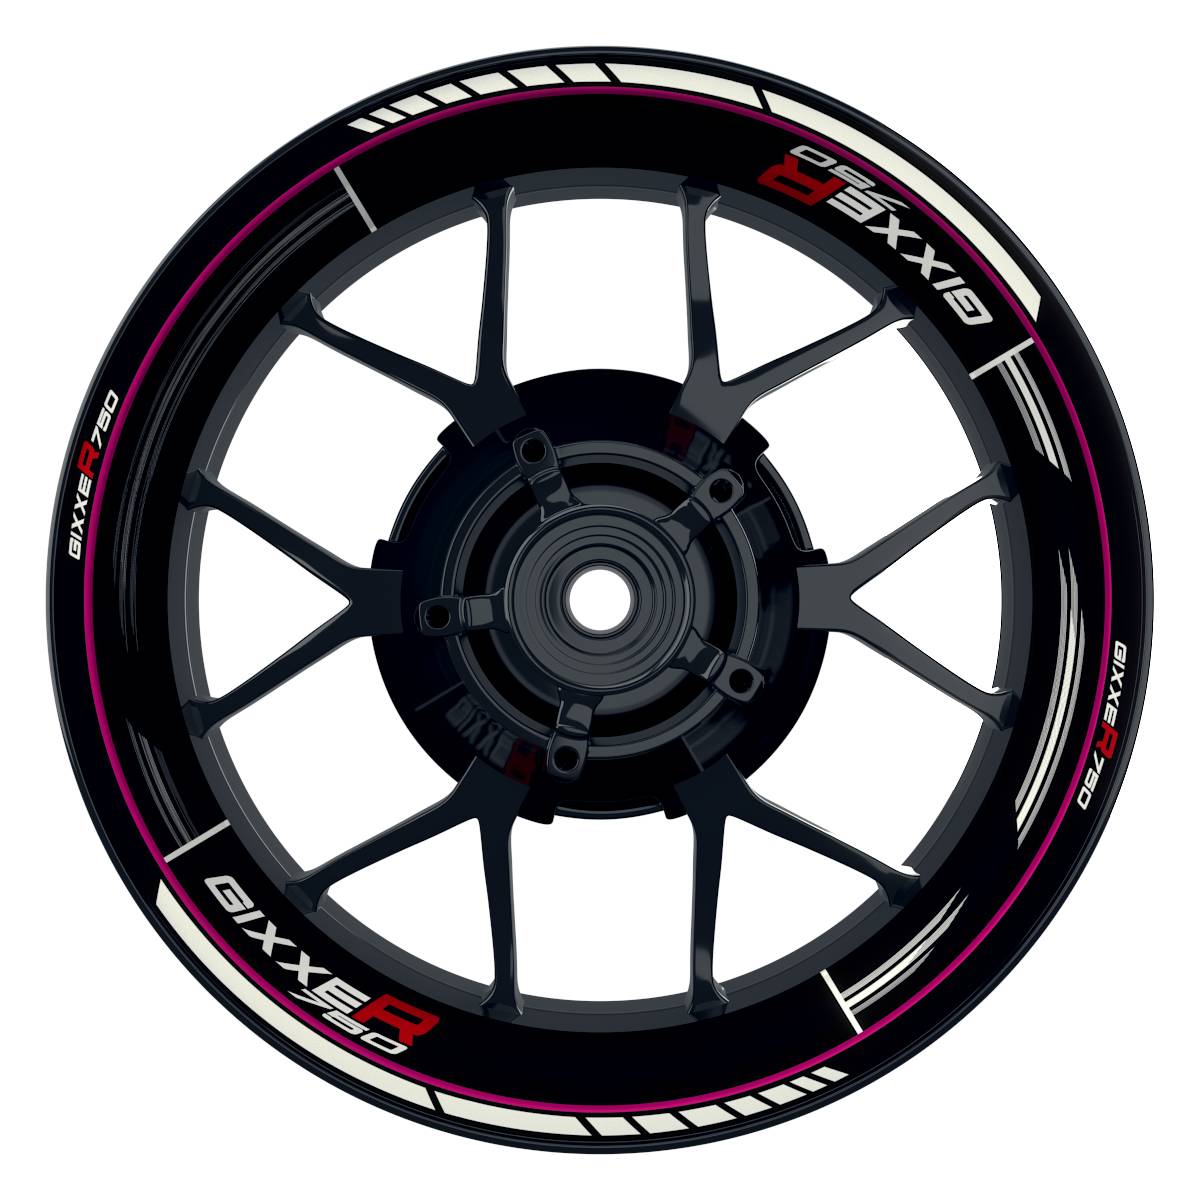 GIXXER750 Scratched schwarz pink Wheelsticker Felgenaufkleber